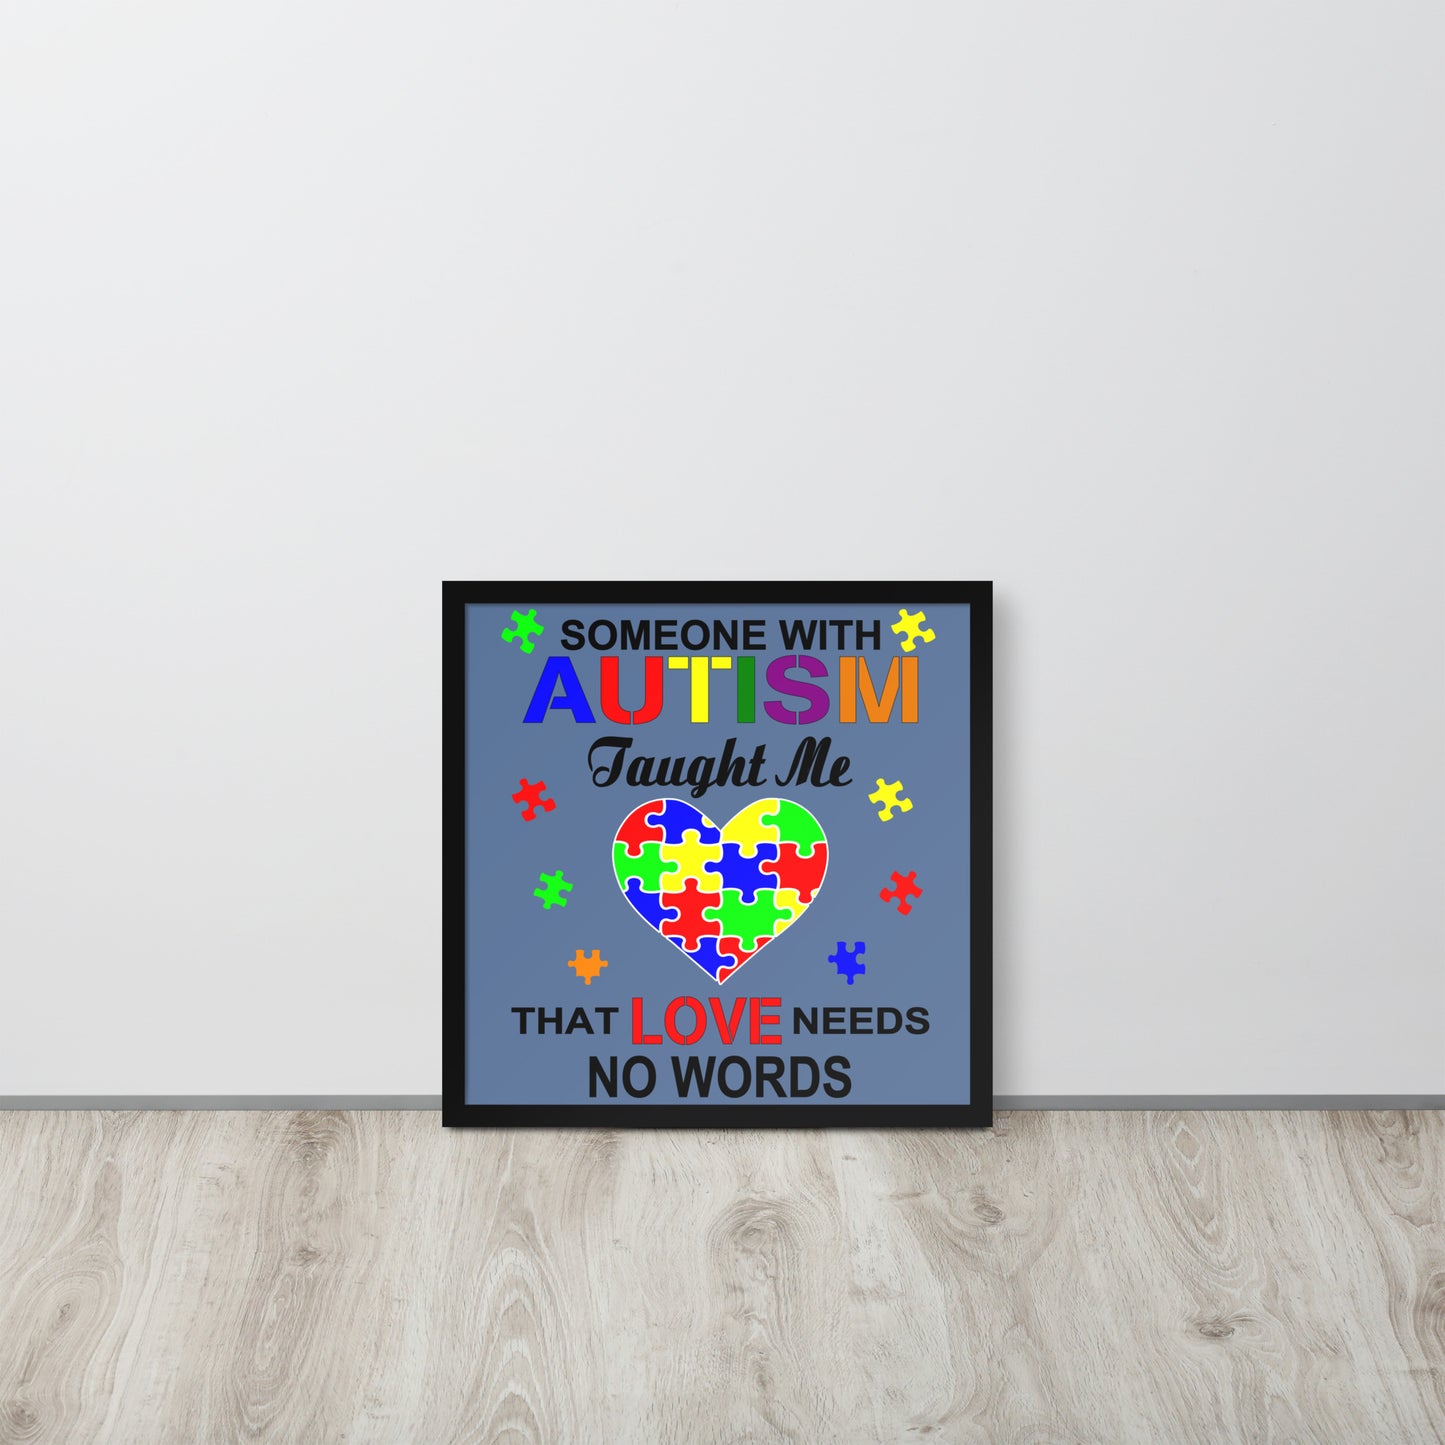 Autism Acceptance Together Wooden Framed Quality Print